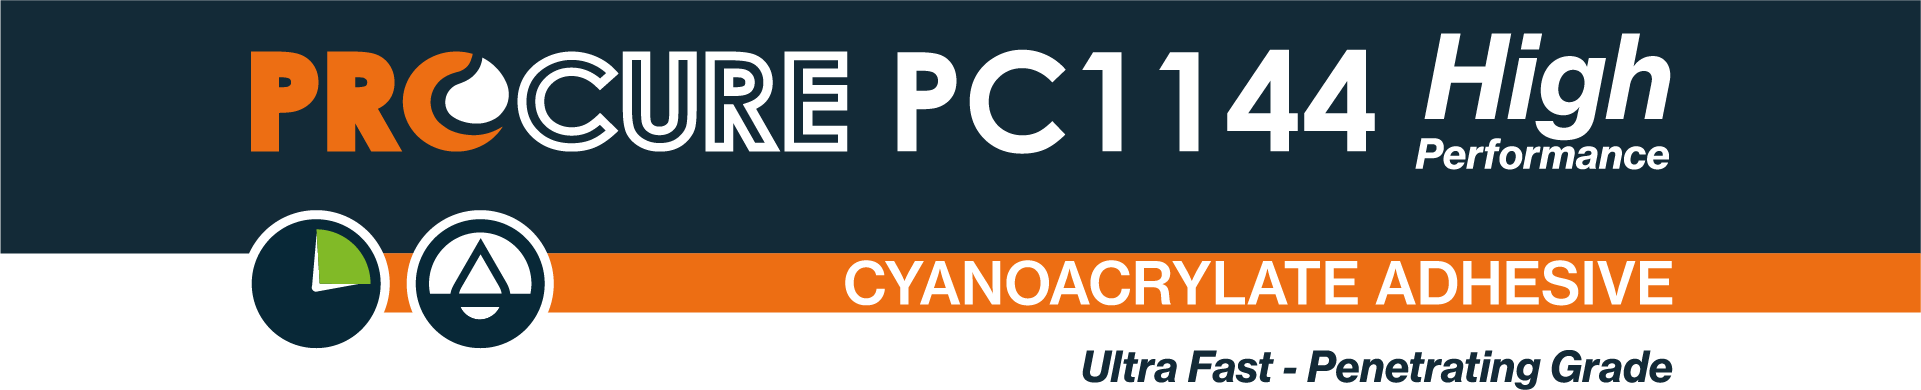 Procure PC1144 High Performance Cyanoacrylate Adhesive Banner Image.